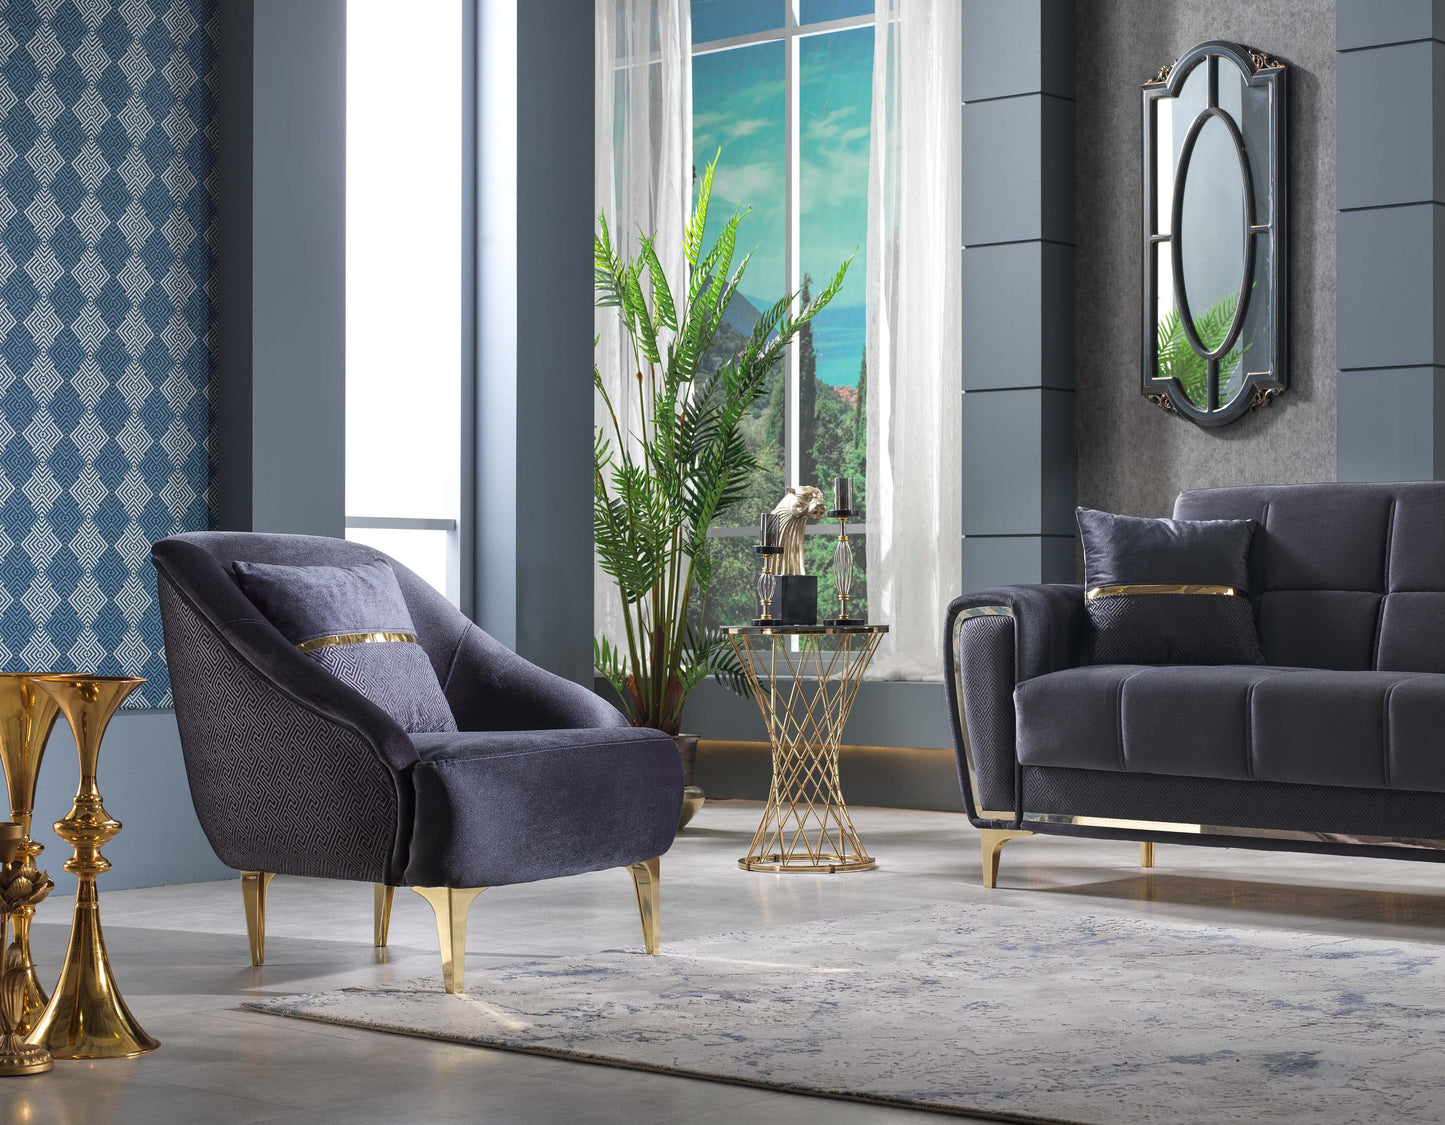 Convertible Livingroom (1 Sofa & 1 Loveseat & 1 Chair) Anthracite